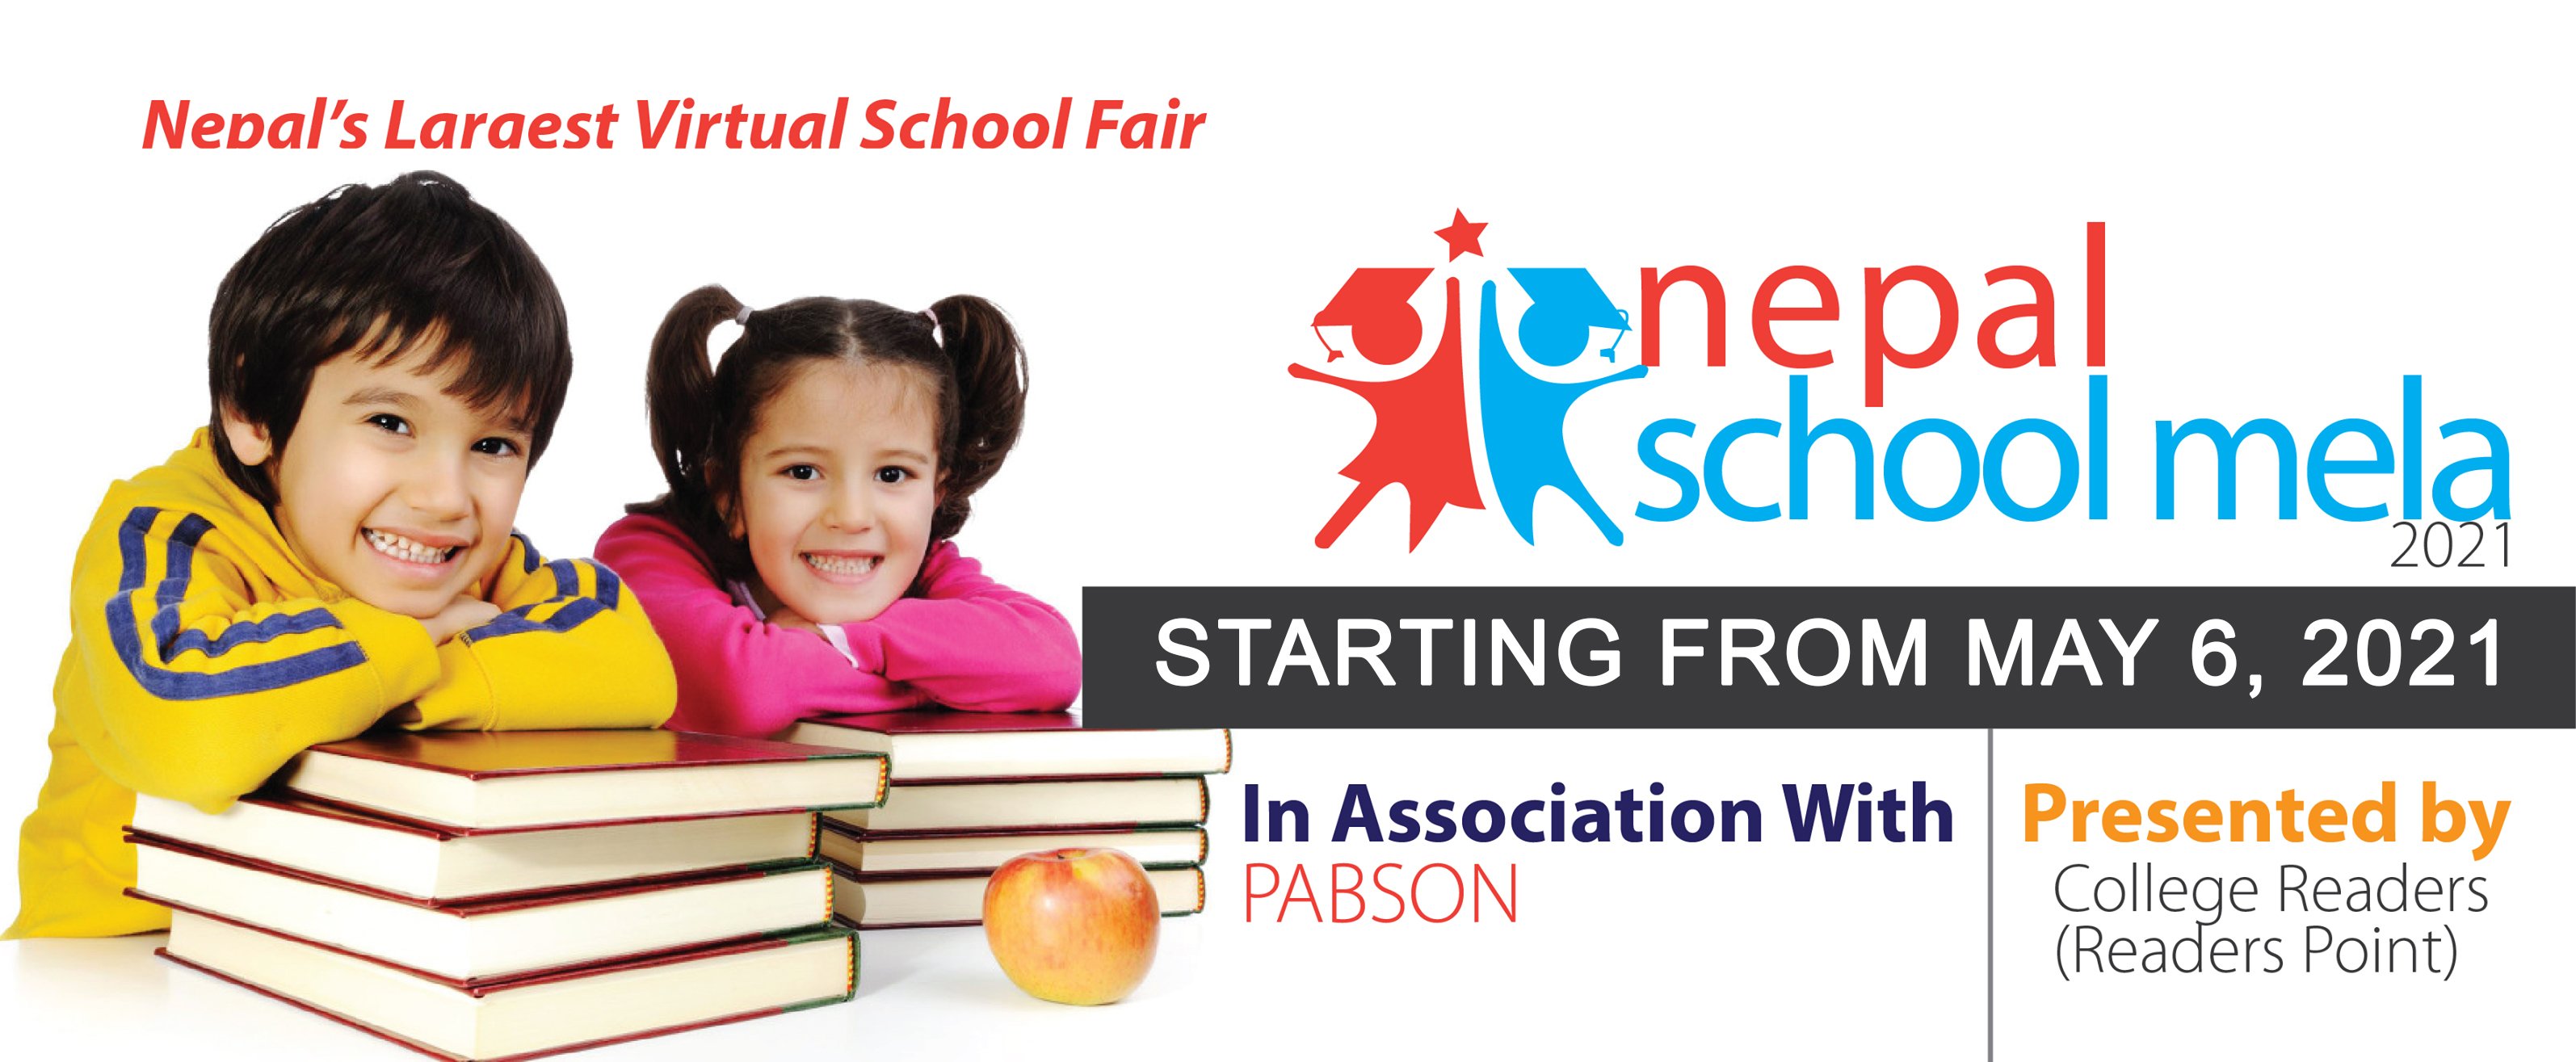 Nepal's first largest virtual Edu Fair-NEPAL SCHOOL MELA-2021 to kick-off today